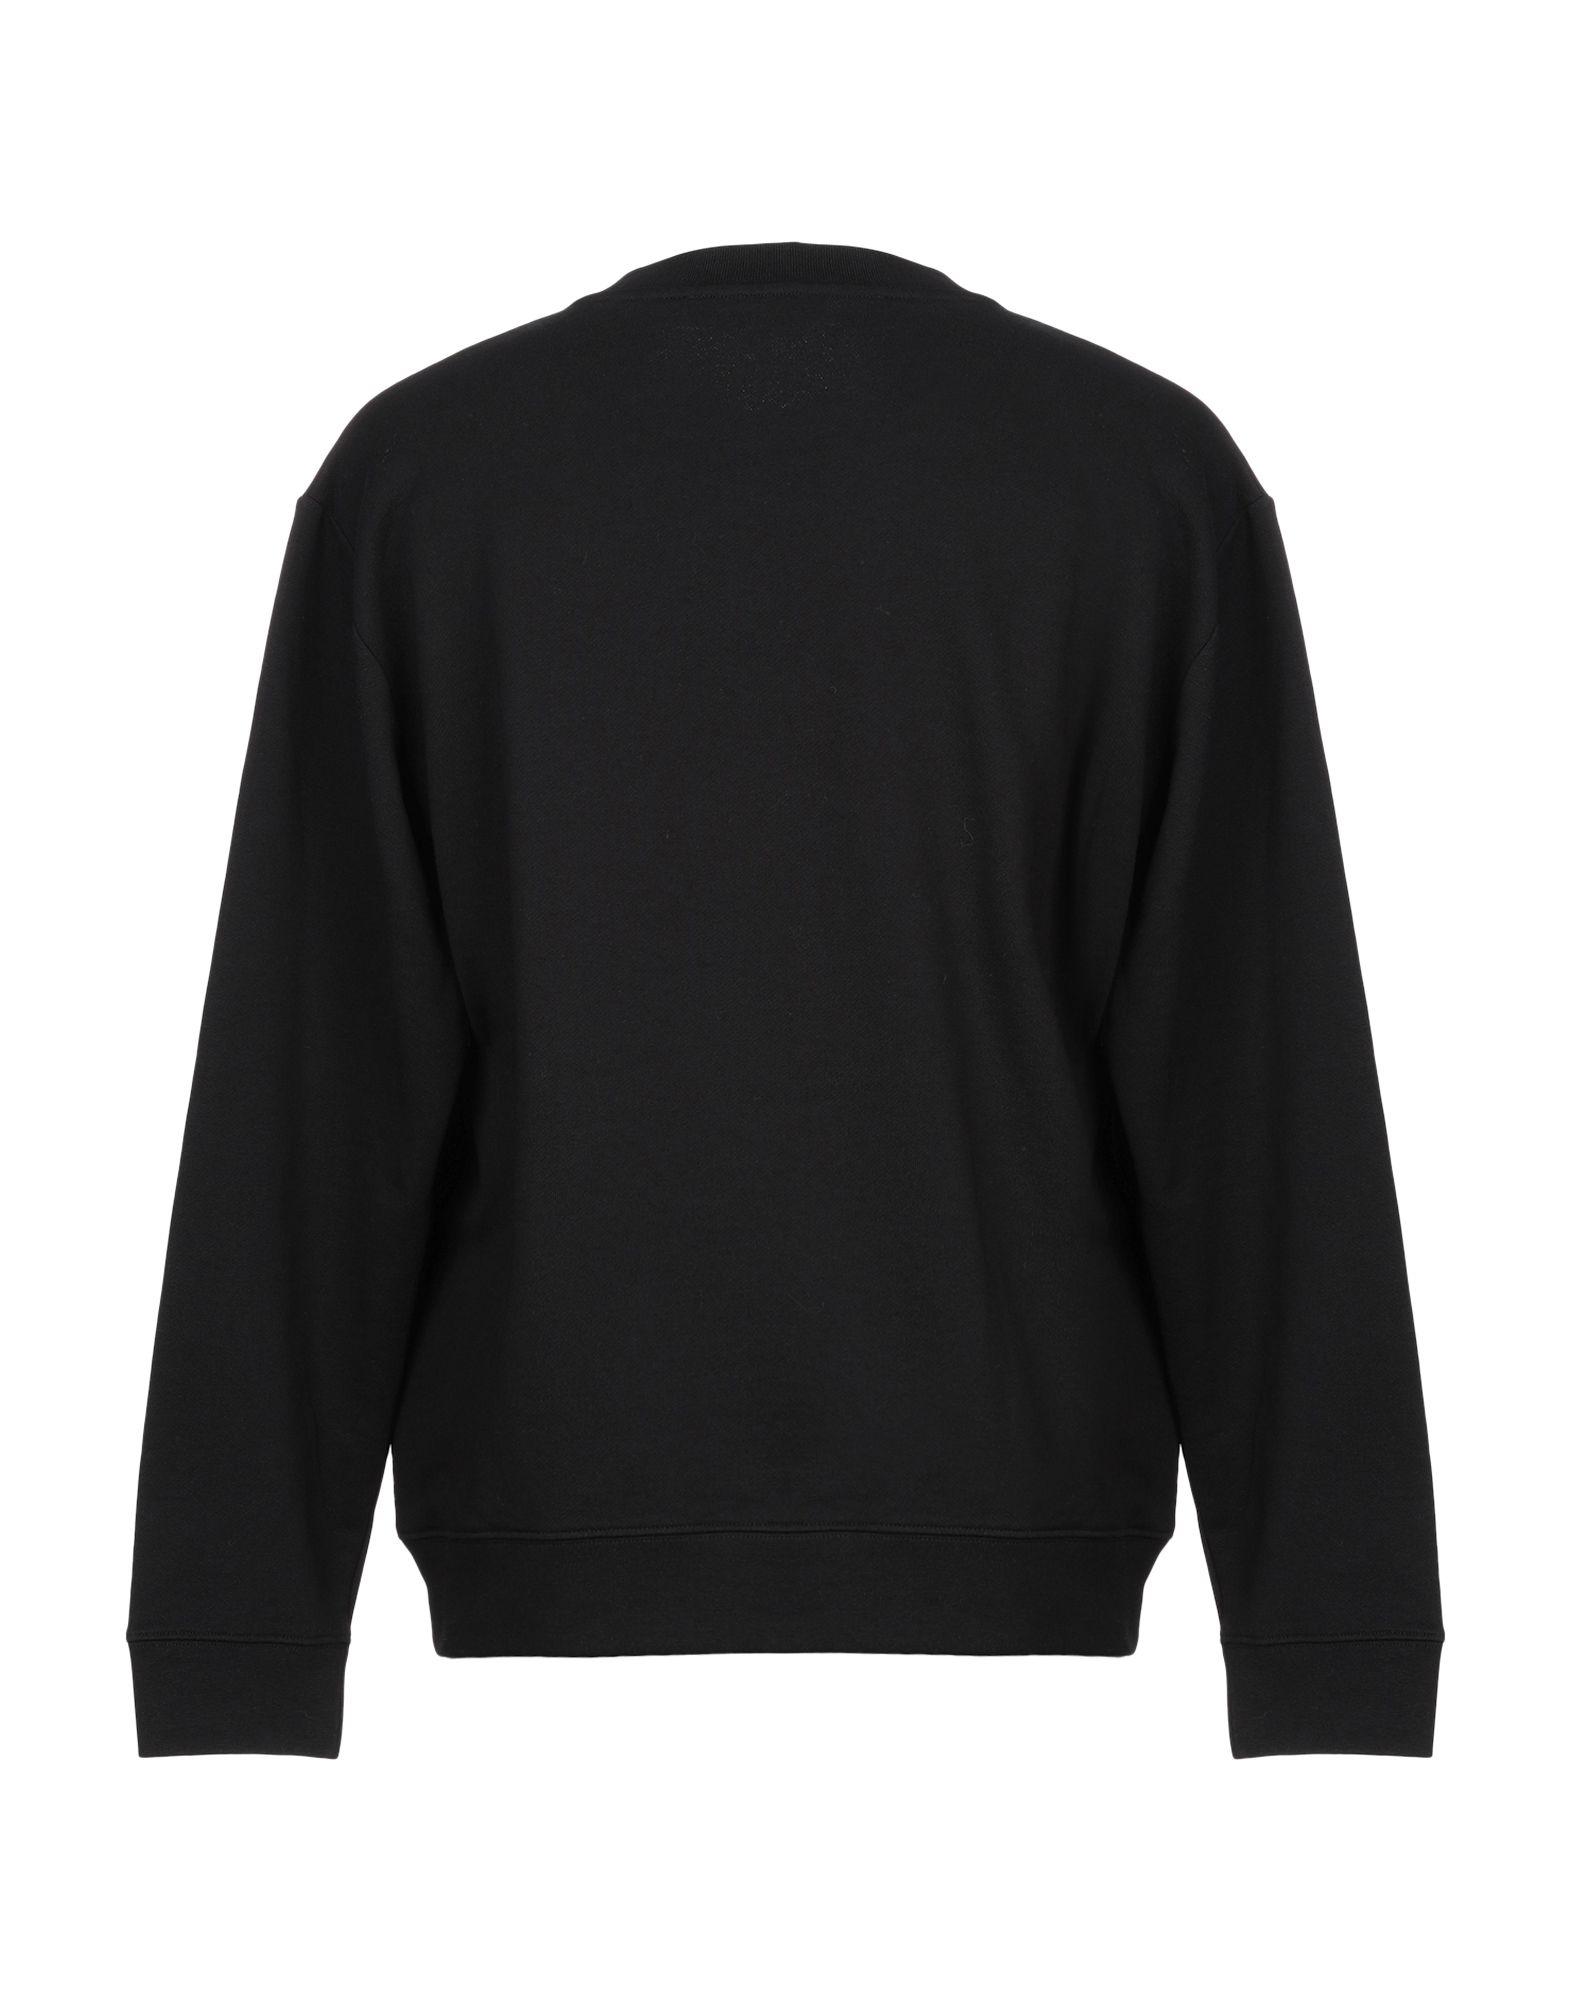 McQ Sweatshirt in Black for Men - Lyst